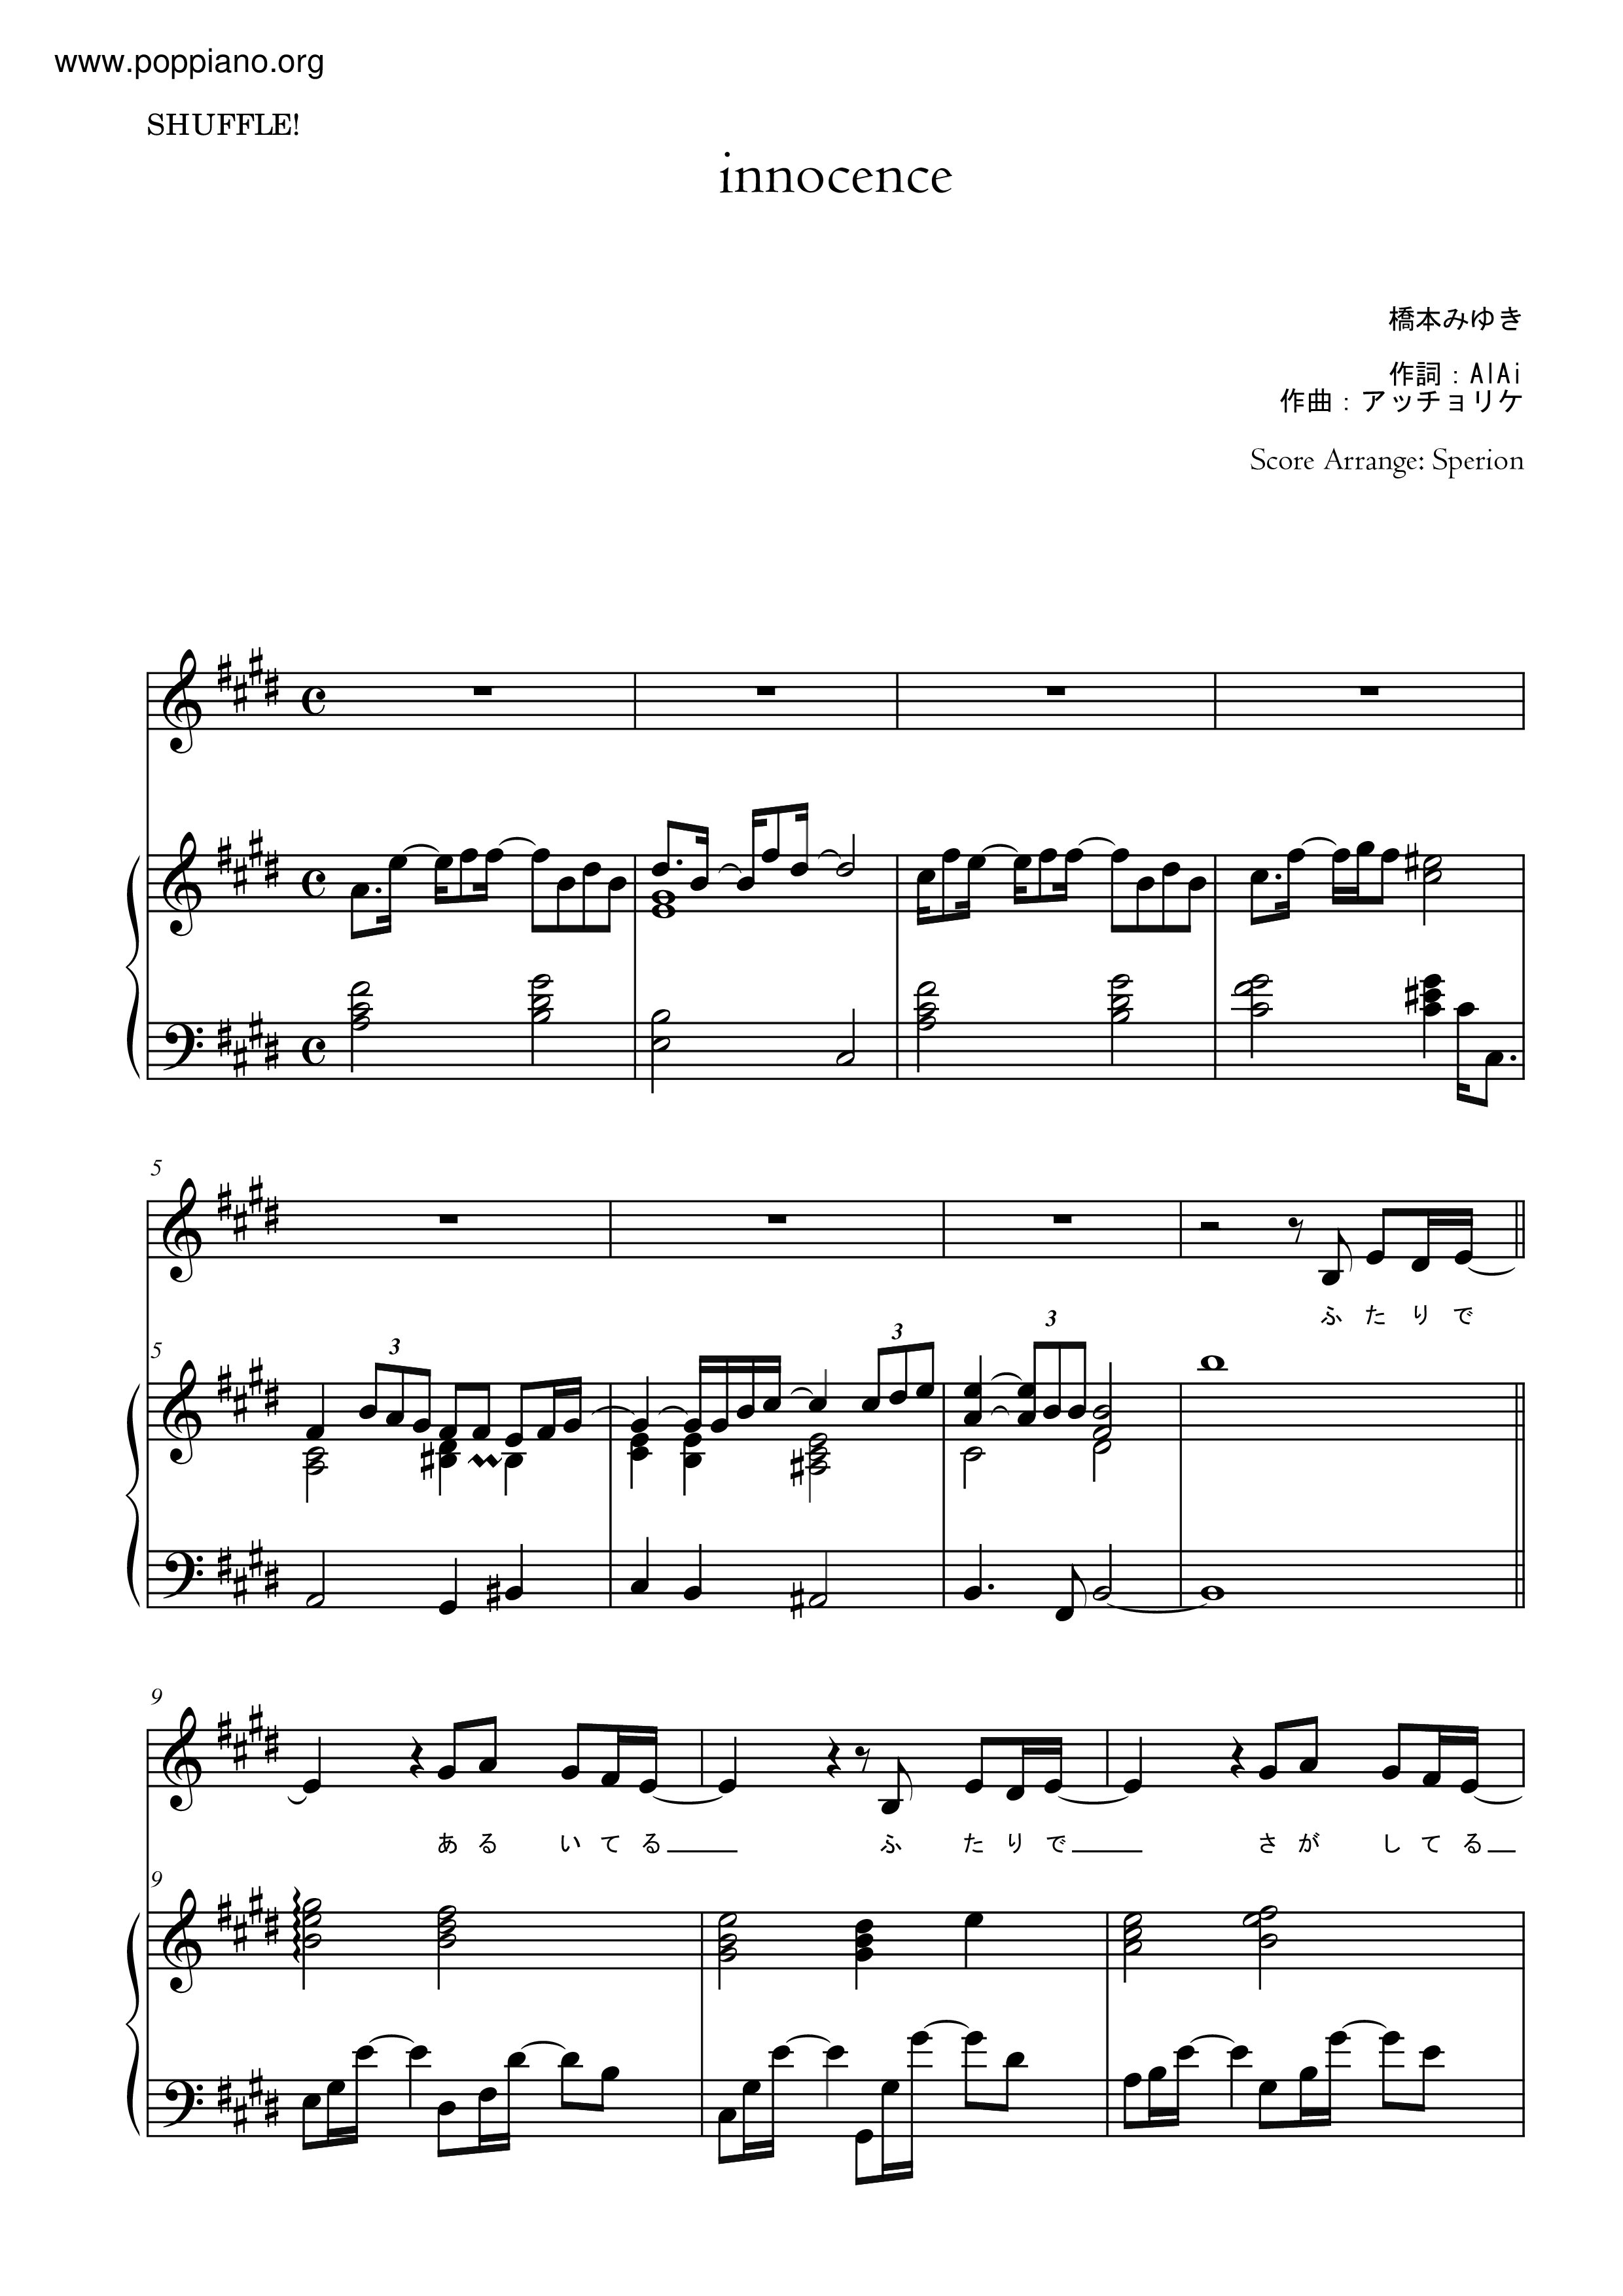 Shuffle Innocence 橋本みゆき Sheet Music Pdf Free Score Download